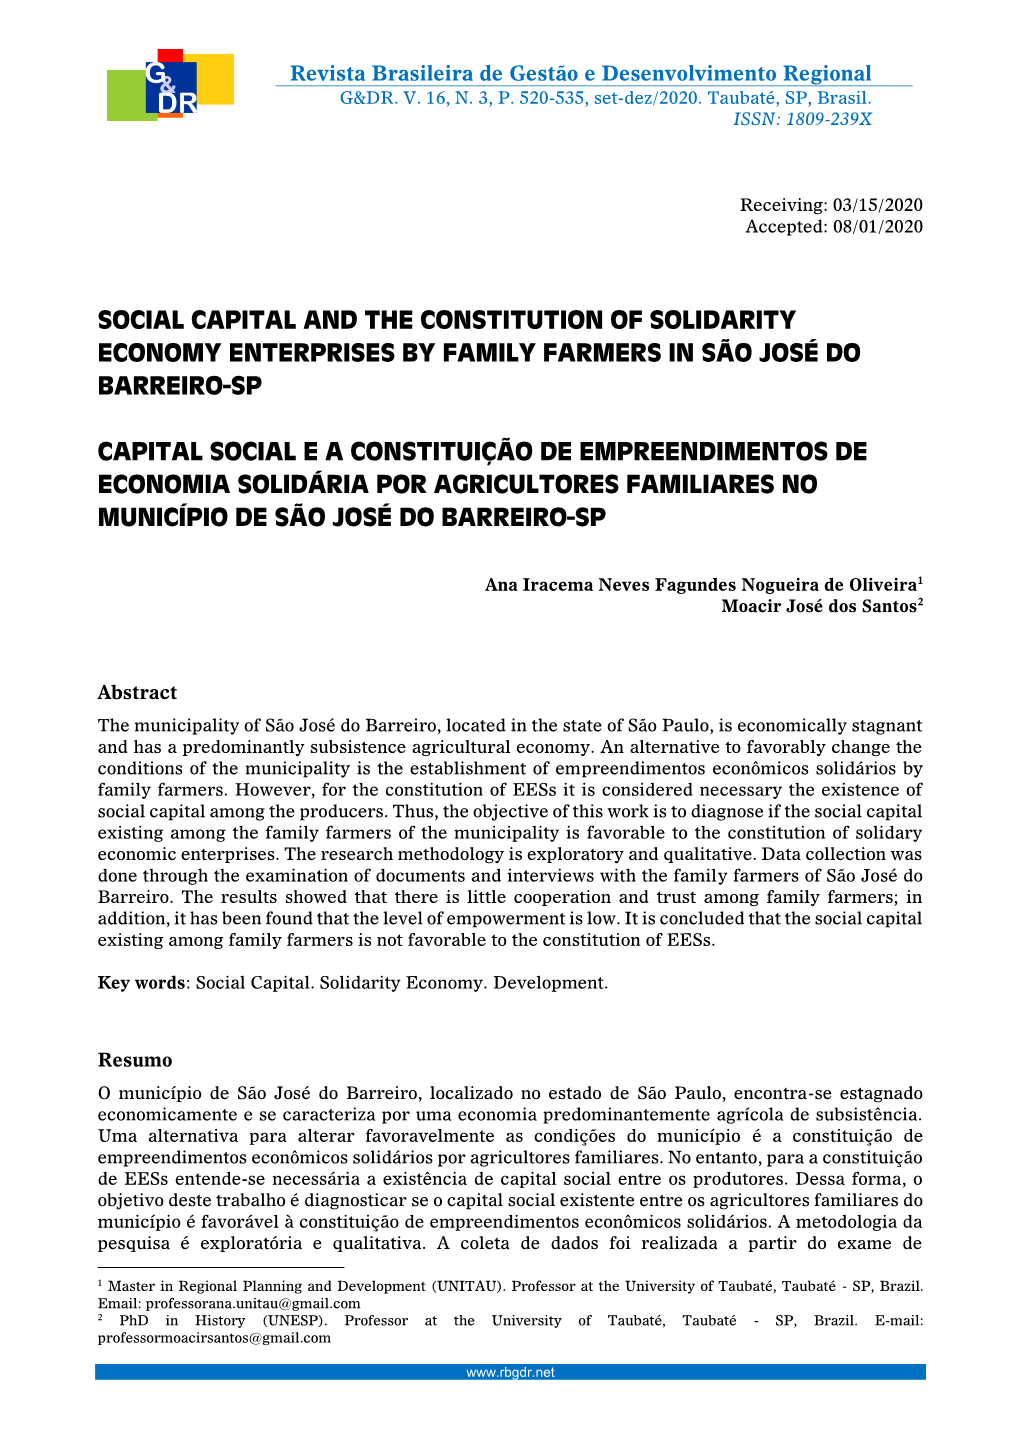 Social Capital and the Constitution of Solidarity Economy Enterprises by Family Farmers in São José Do Barreiro-Sp